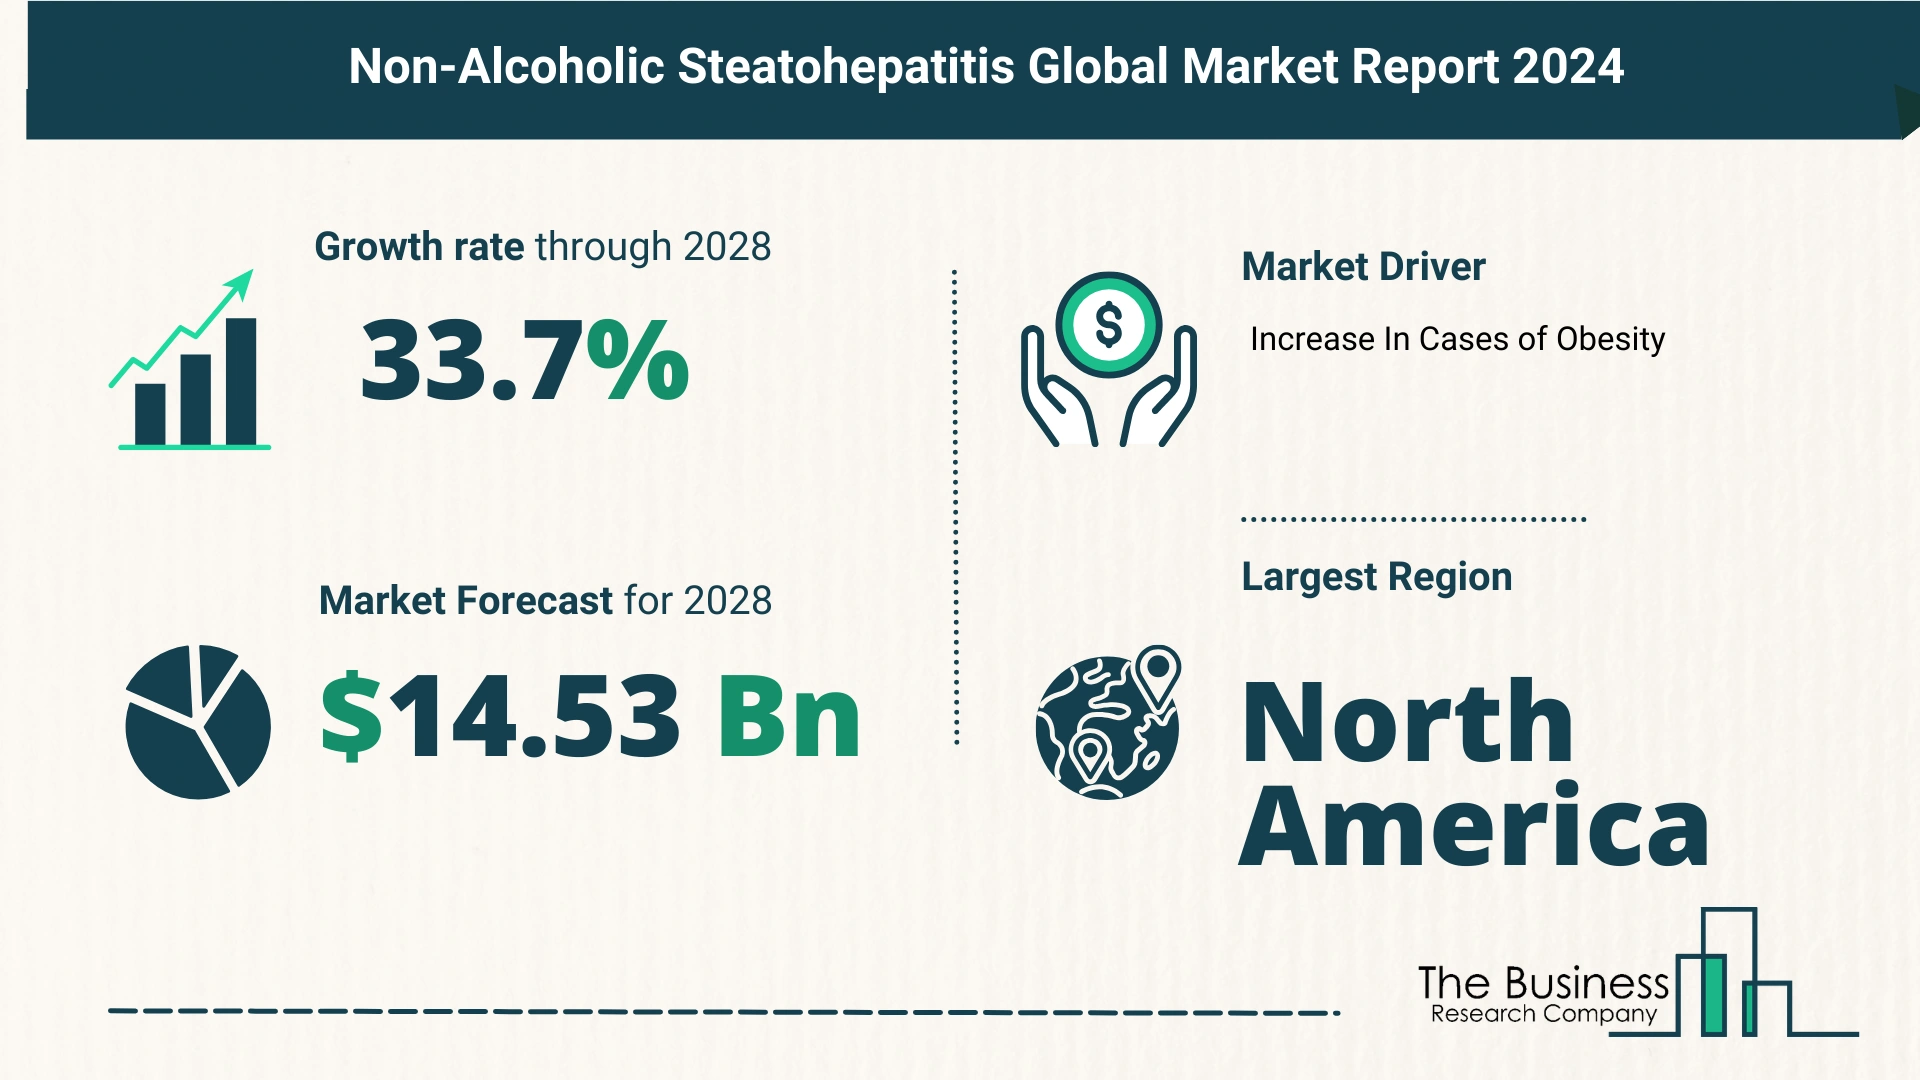 Global Non-Alcoholic Steatohepatitis (NASH) Market Size